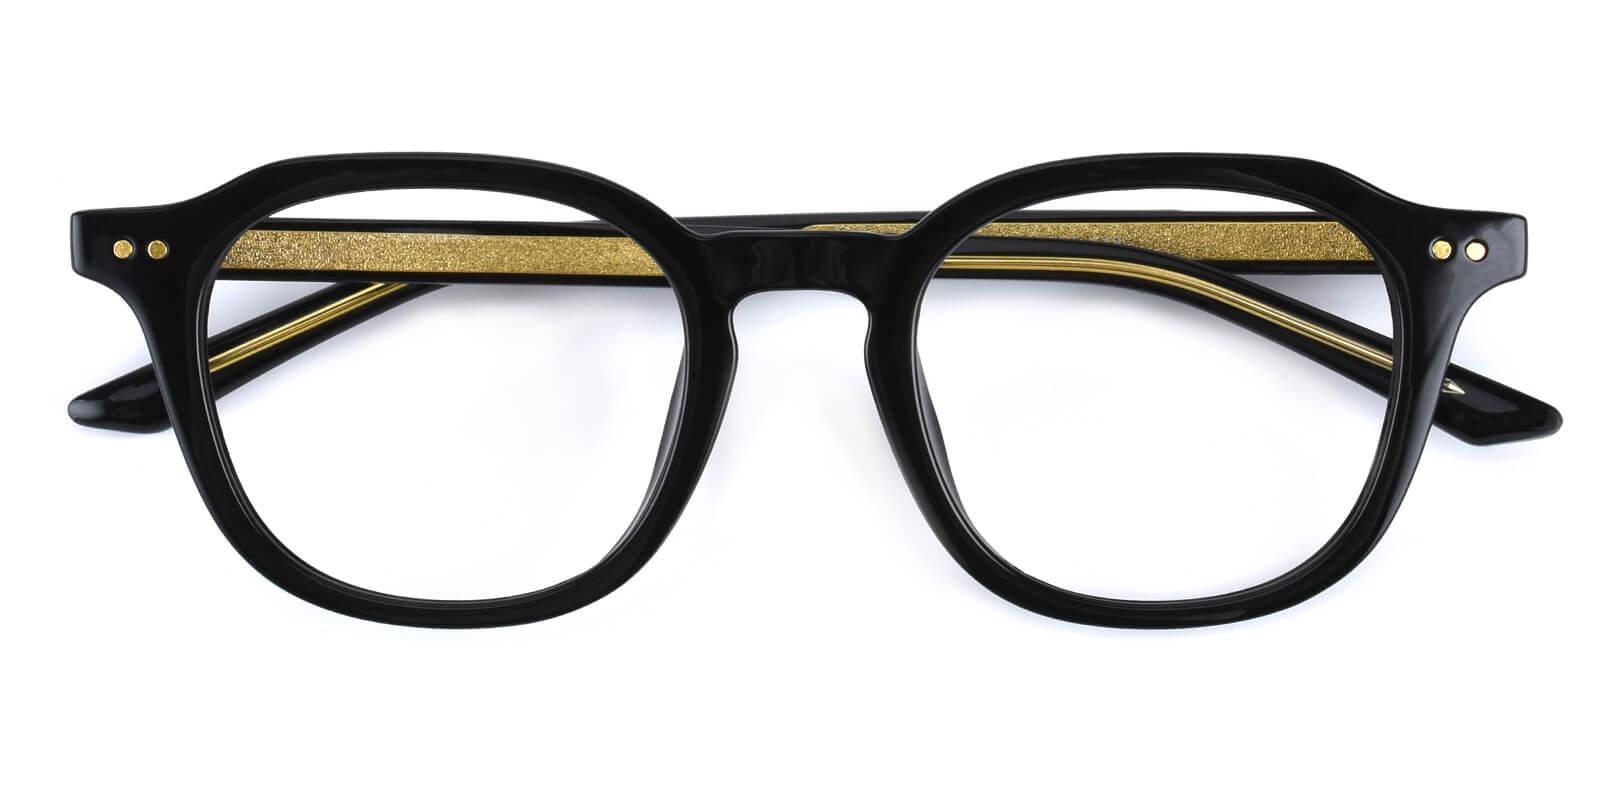 Dapper-Black-Geometric-Acetate-Eyeglasses-detail